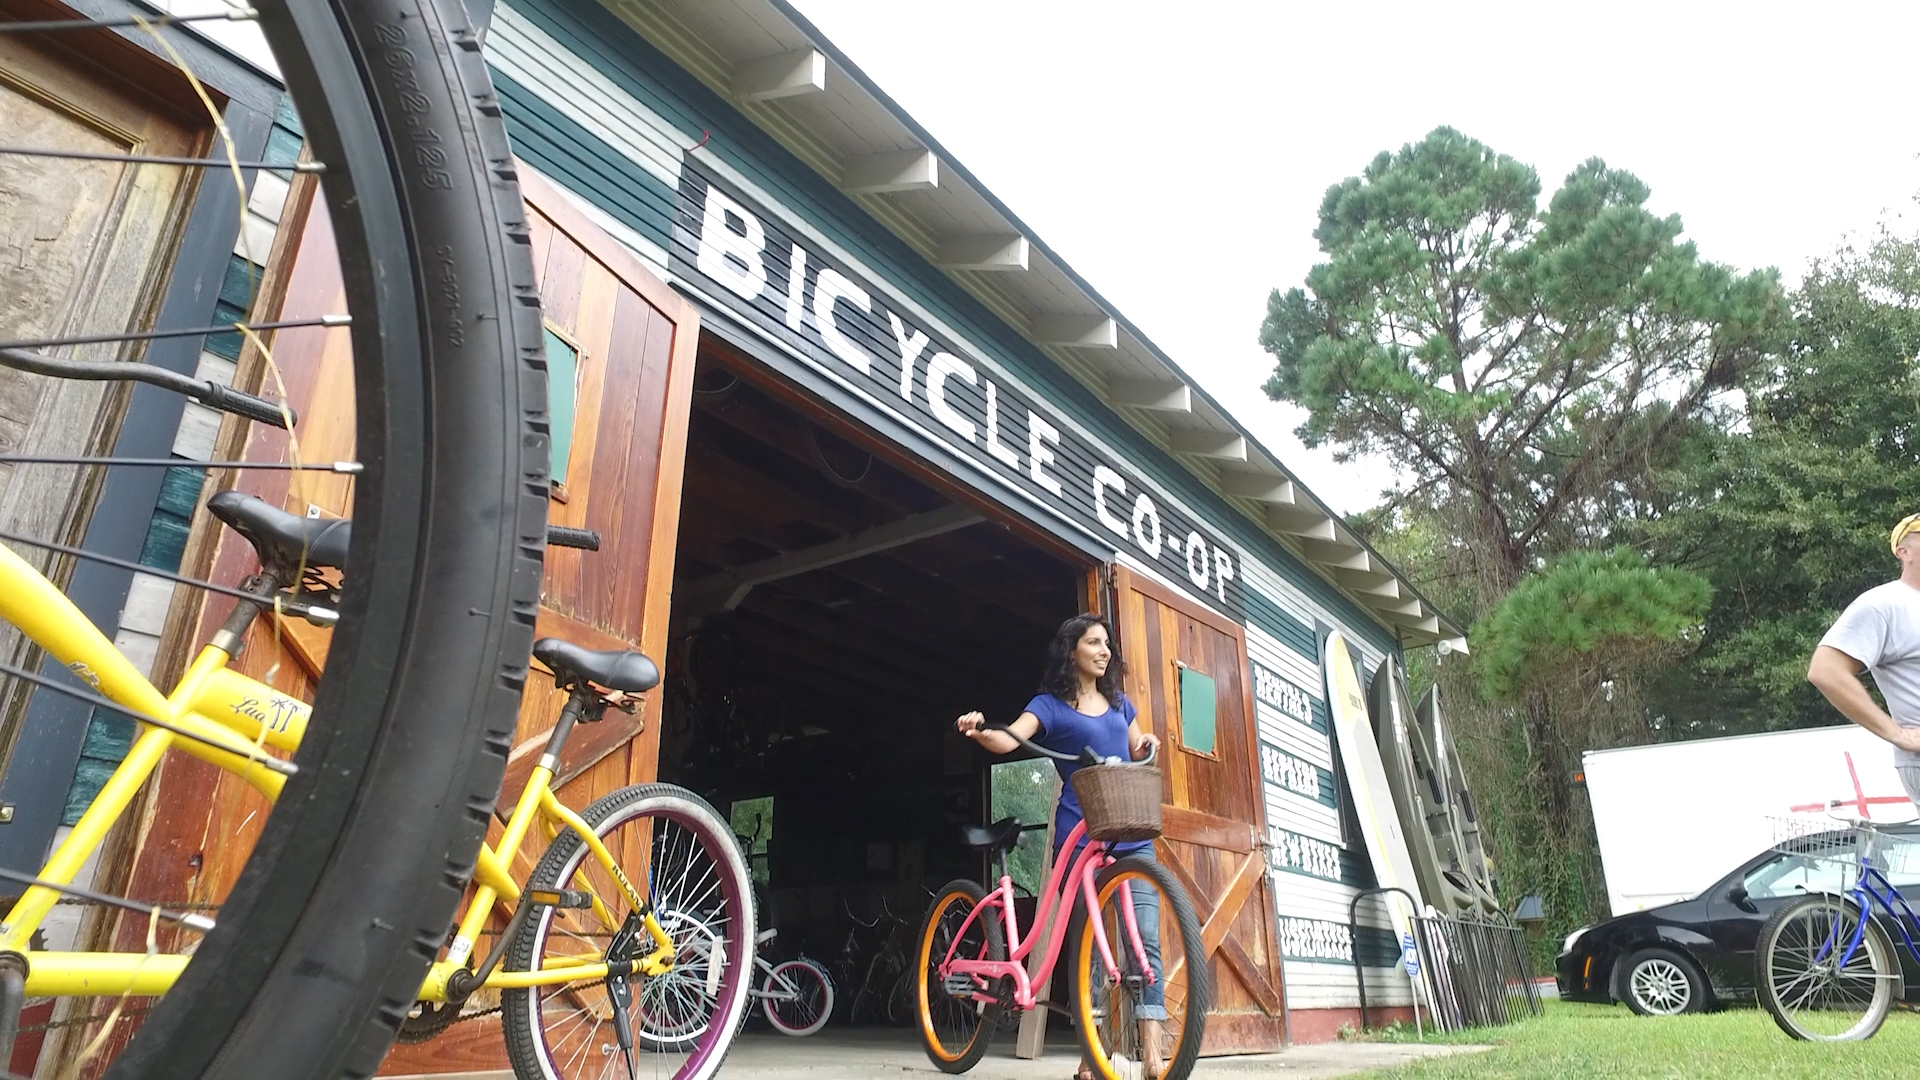 Brooks' Bike Shop's bikes to ride the Tammany Trace